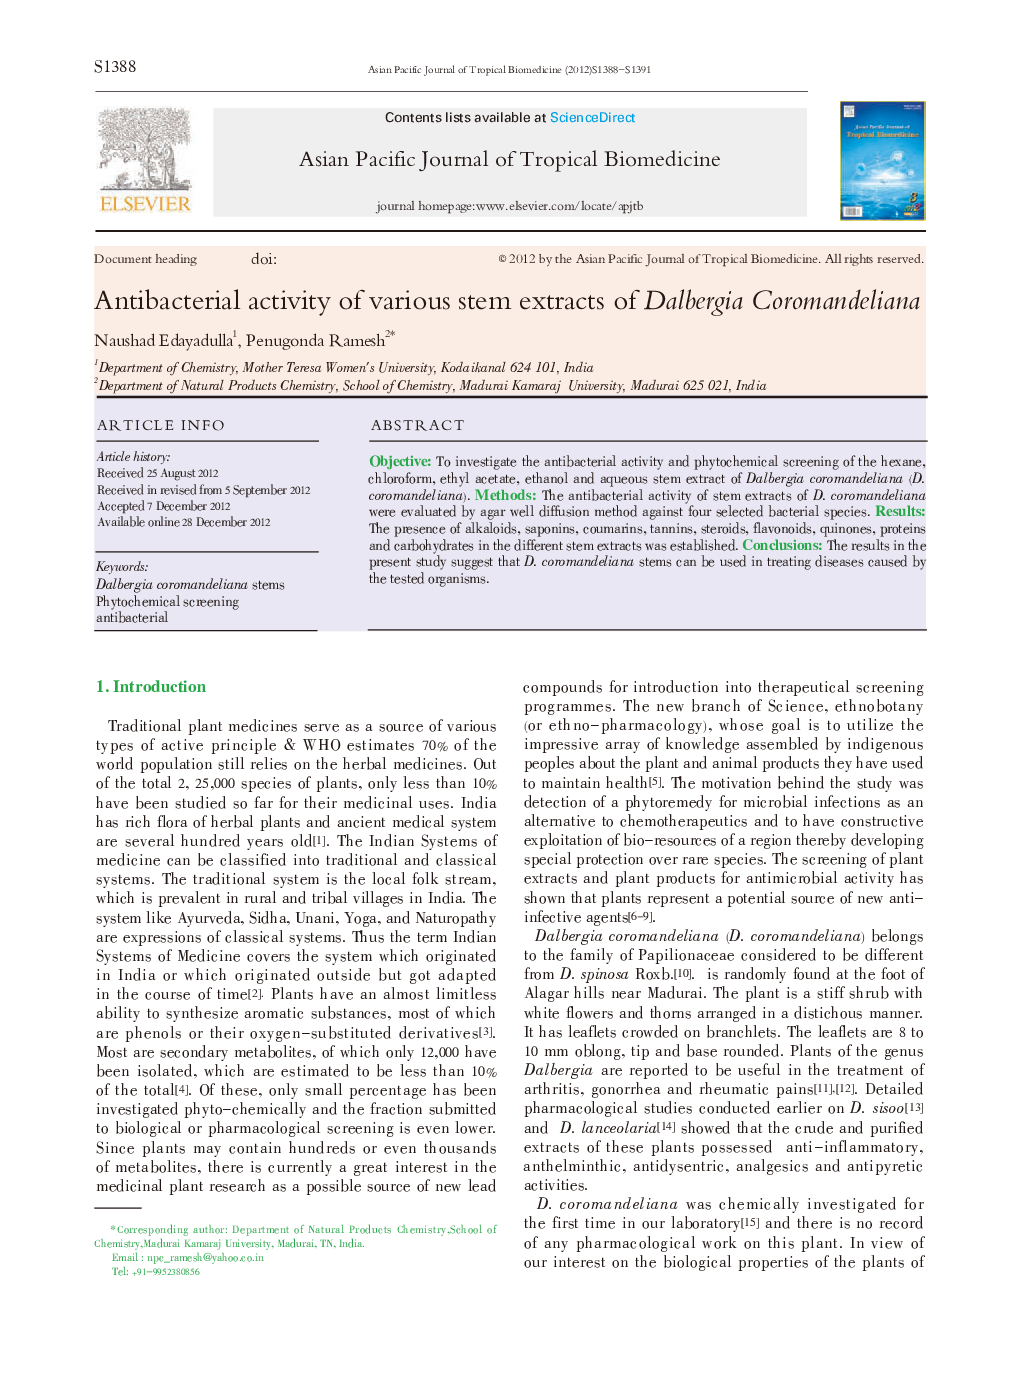 Antibacterial activity of various stem extracts of Dalbergia Coromandeliana